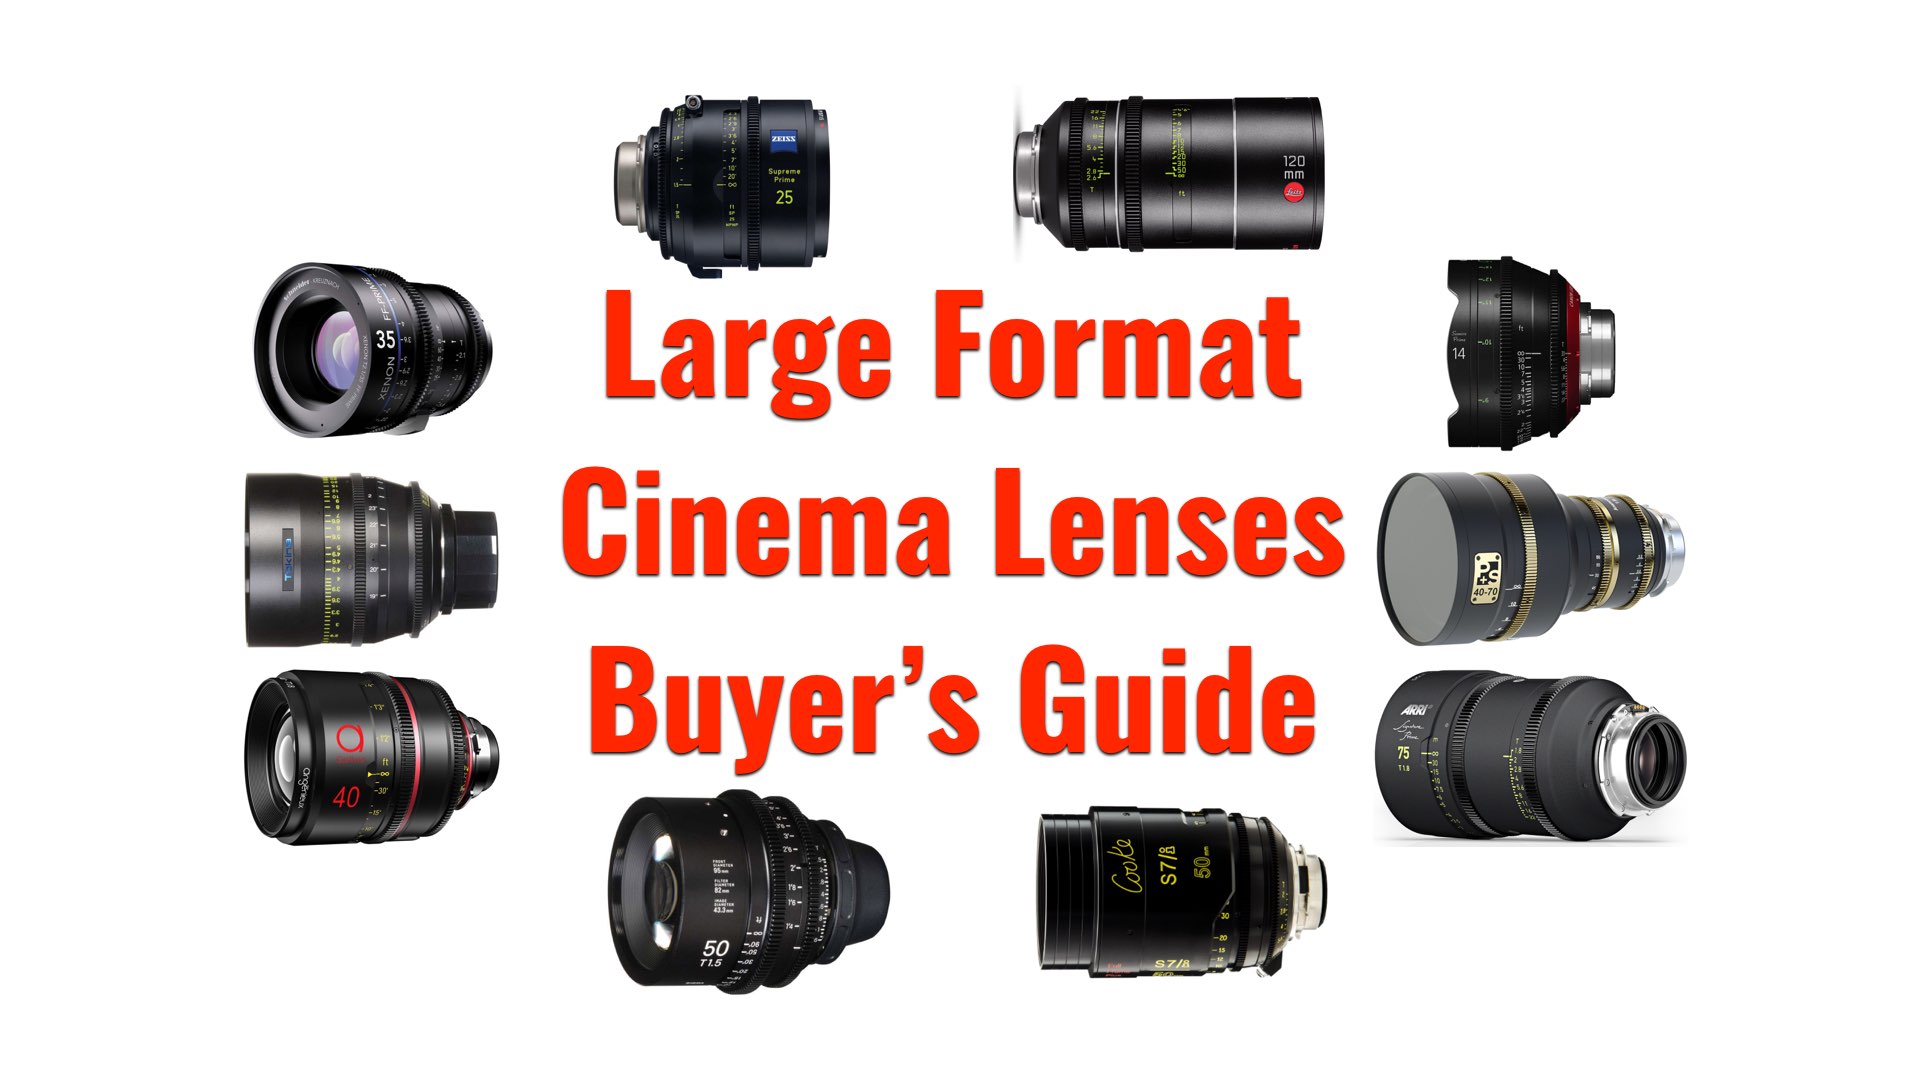 Large Format Cinema Lenses Buyer’s Guide